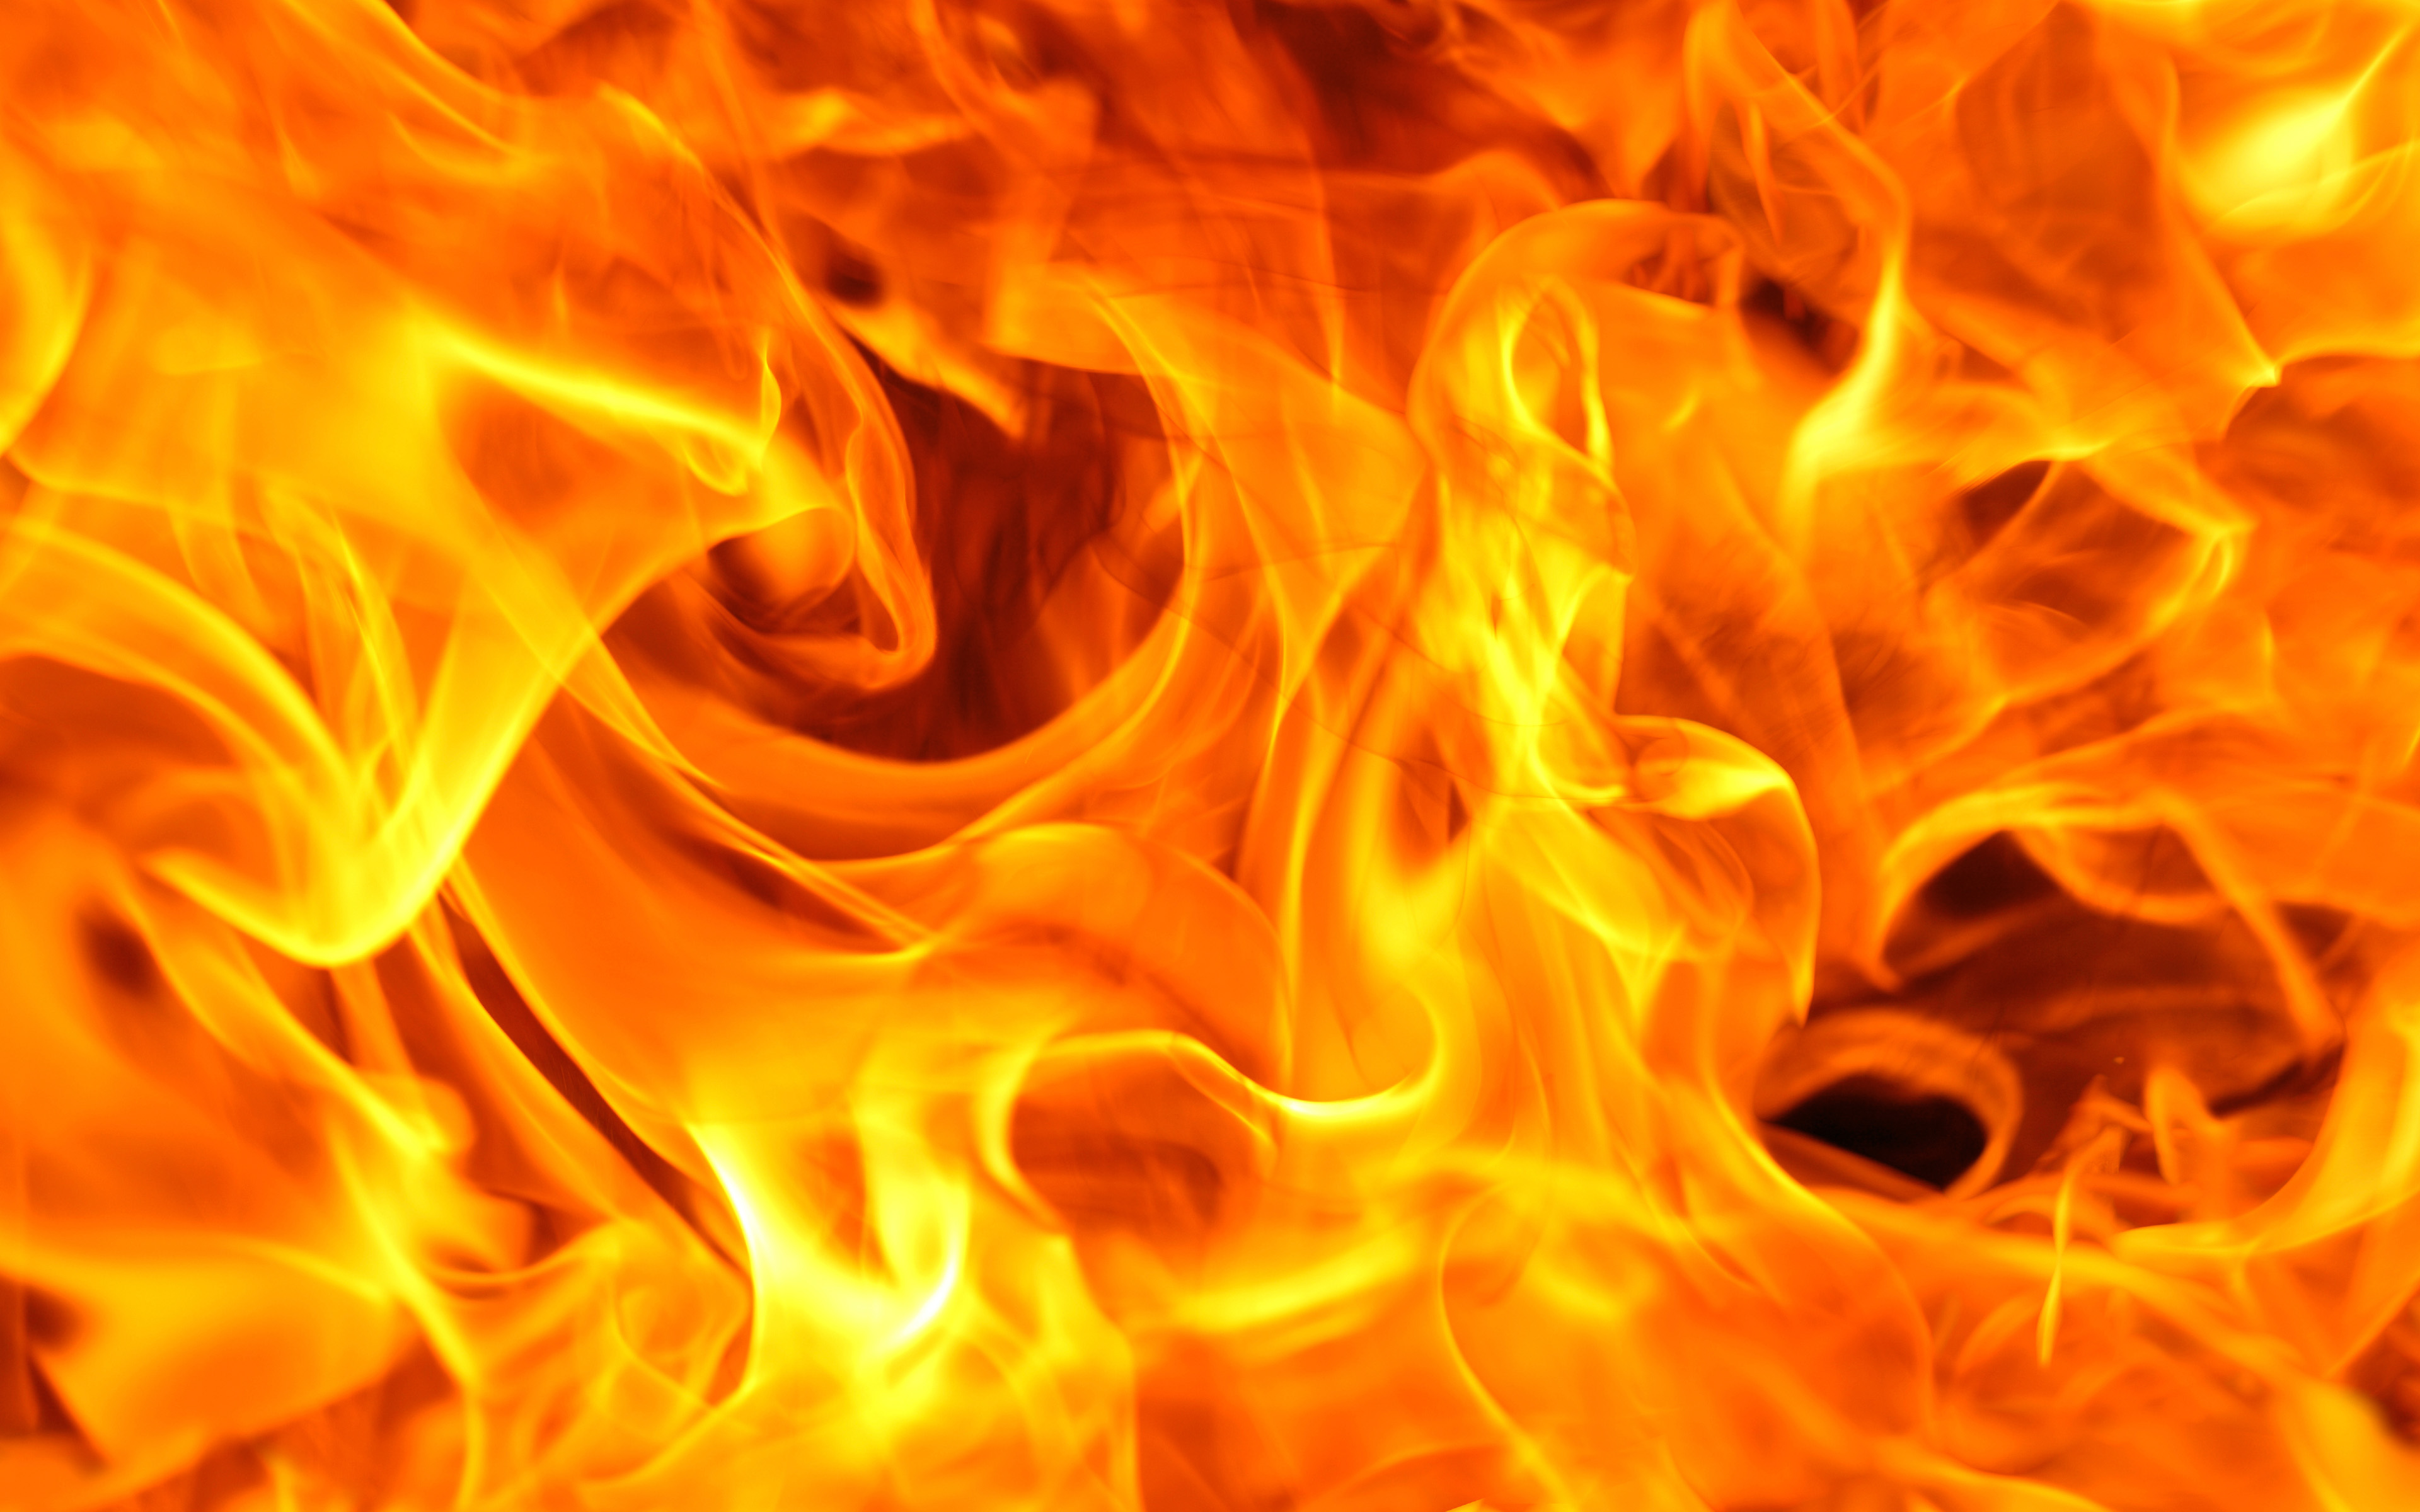 Download wallpaper 4k, orange flames, bonfire, fire flames, macro, orange fire texture, orange fire background for desktop with resolution 3840x2400. High Quality HD picture wallpaper